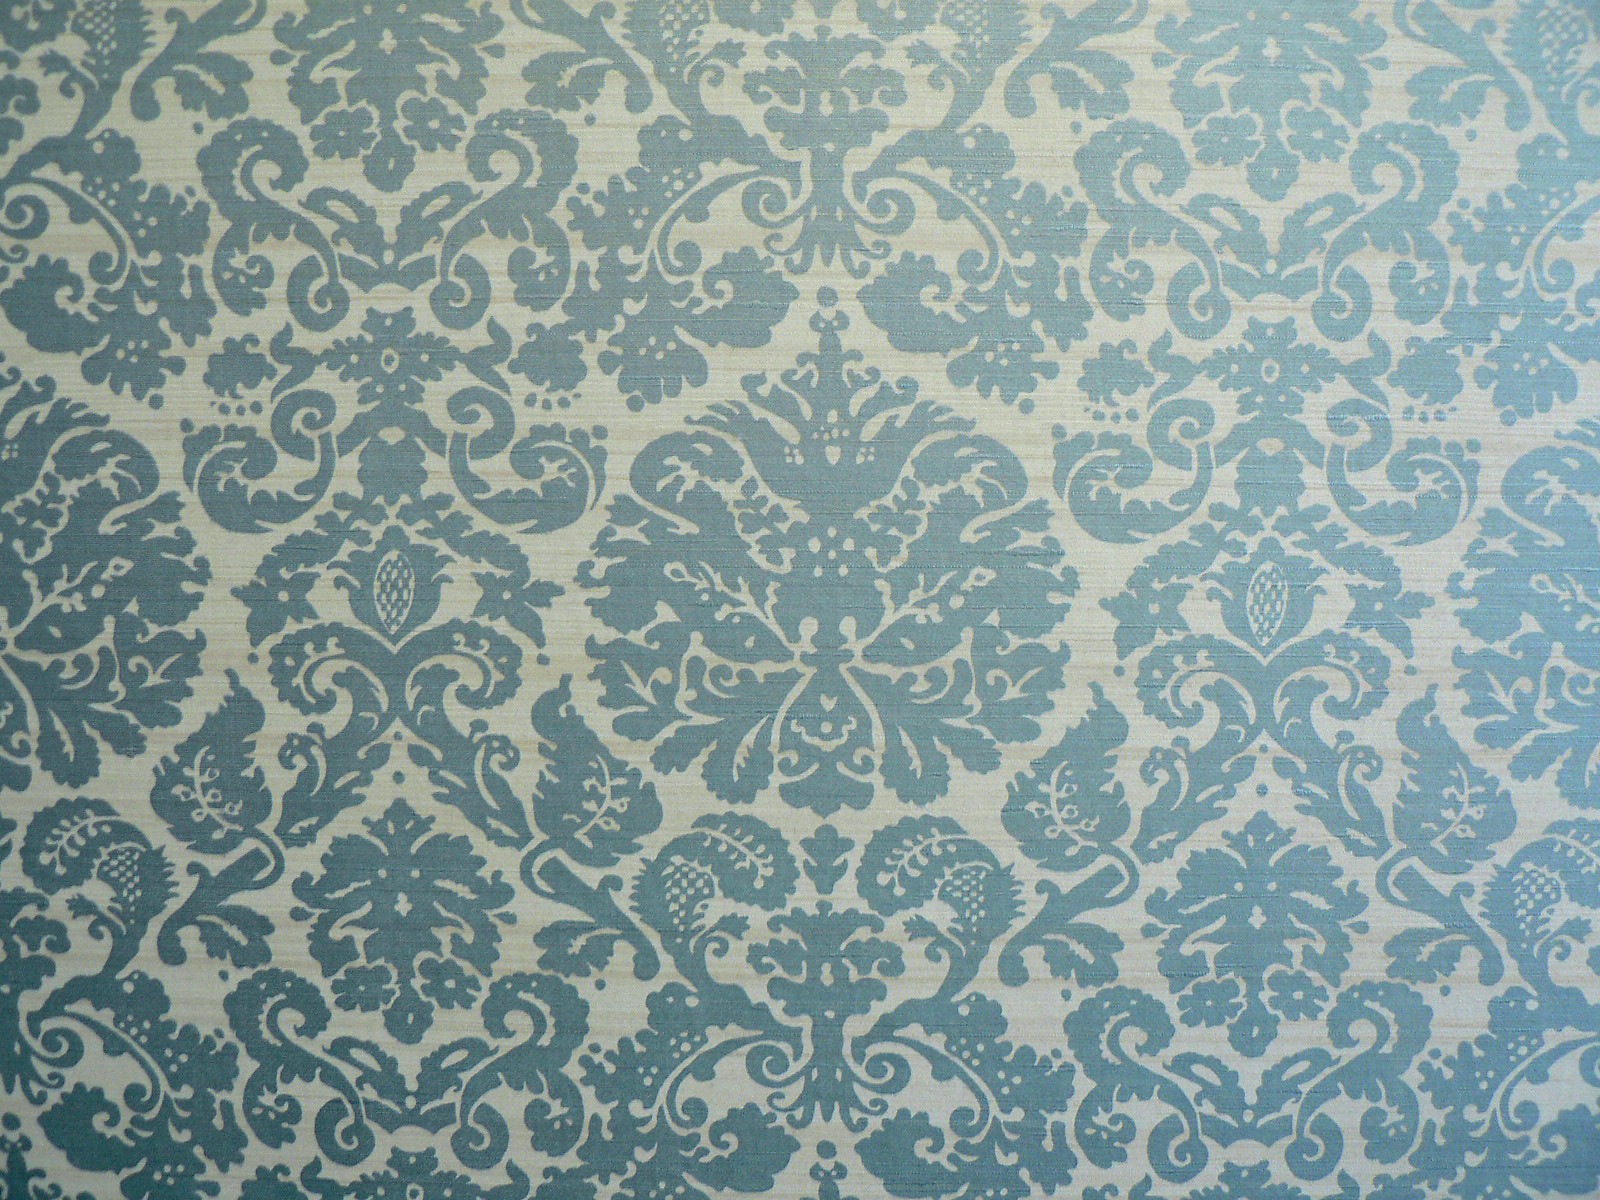 classic wallpaper patterns,pattern,blue,aqua,green,turquoise